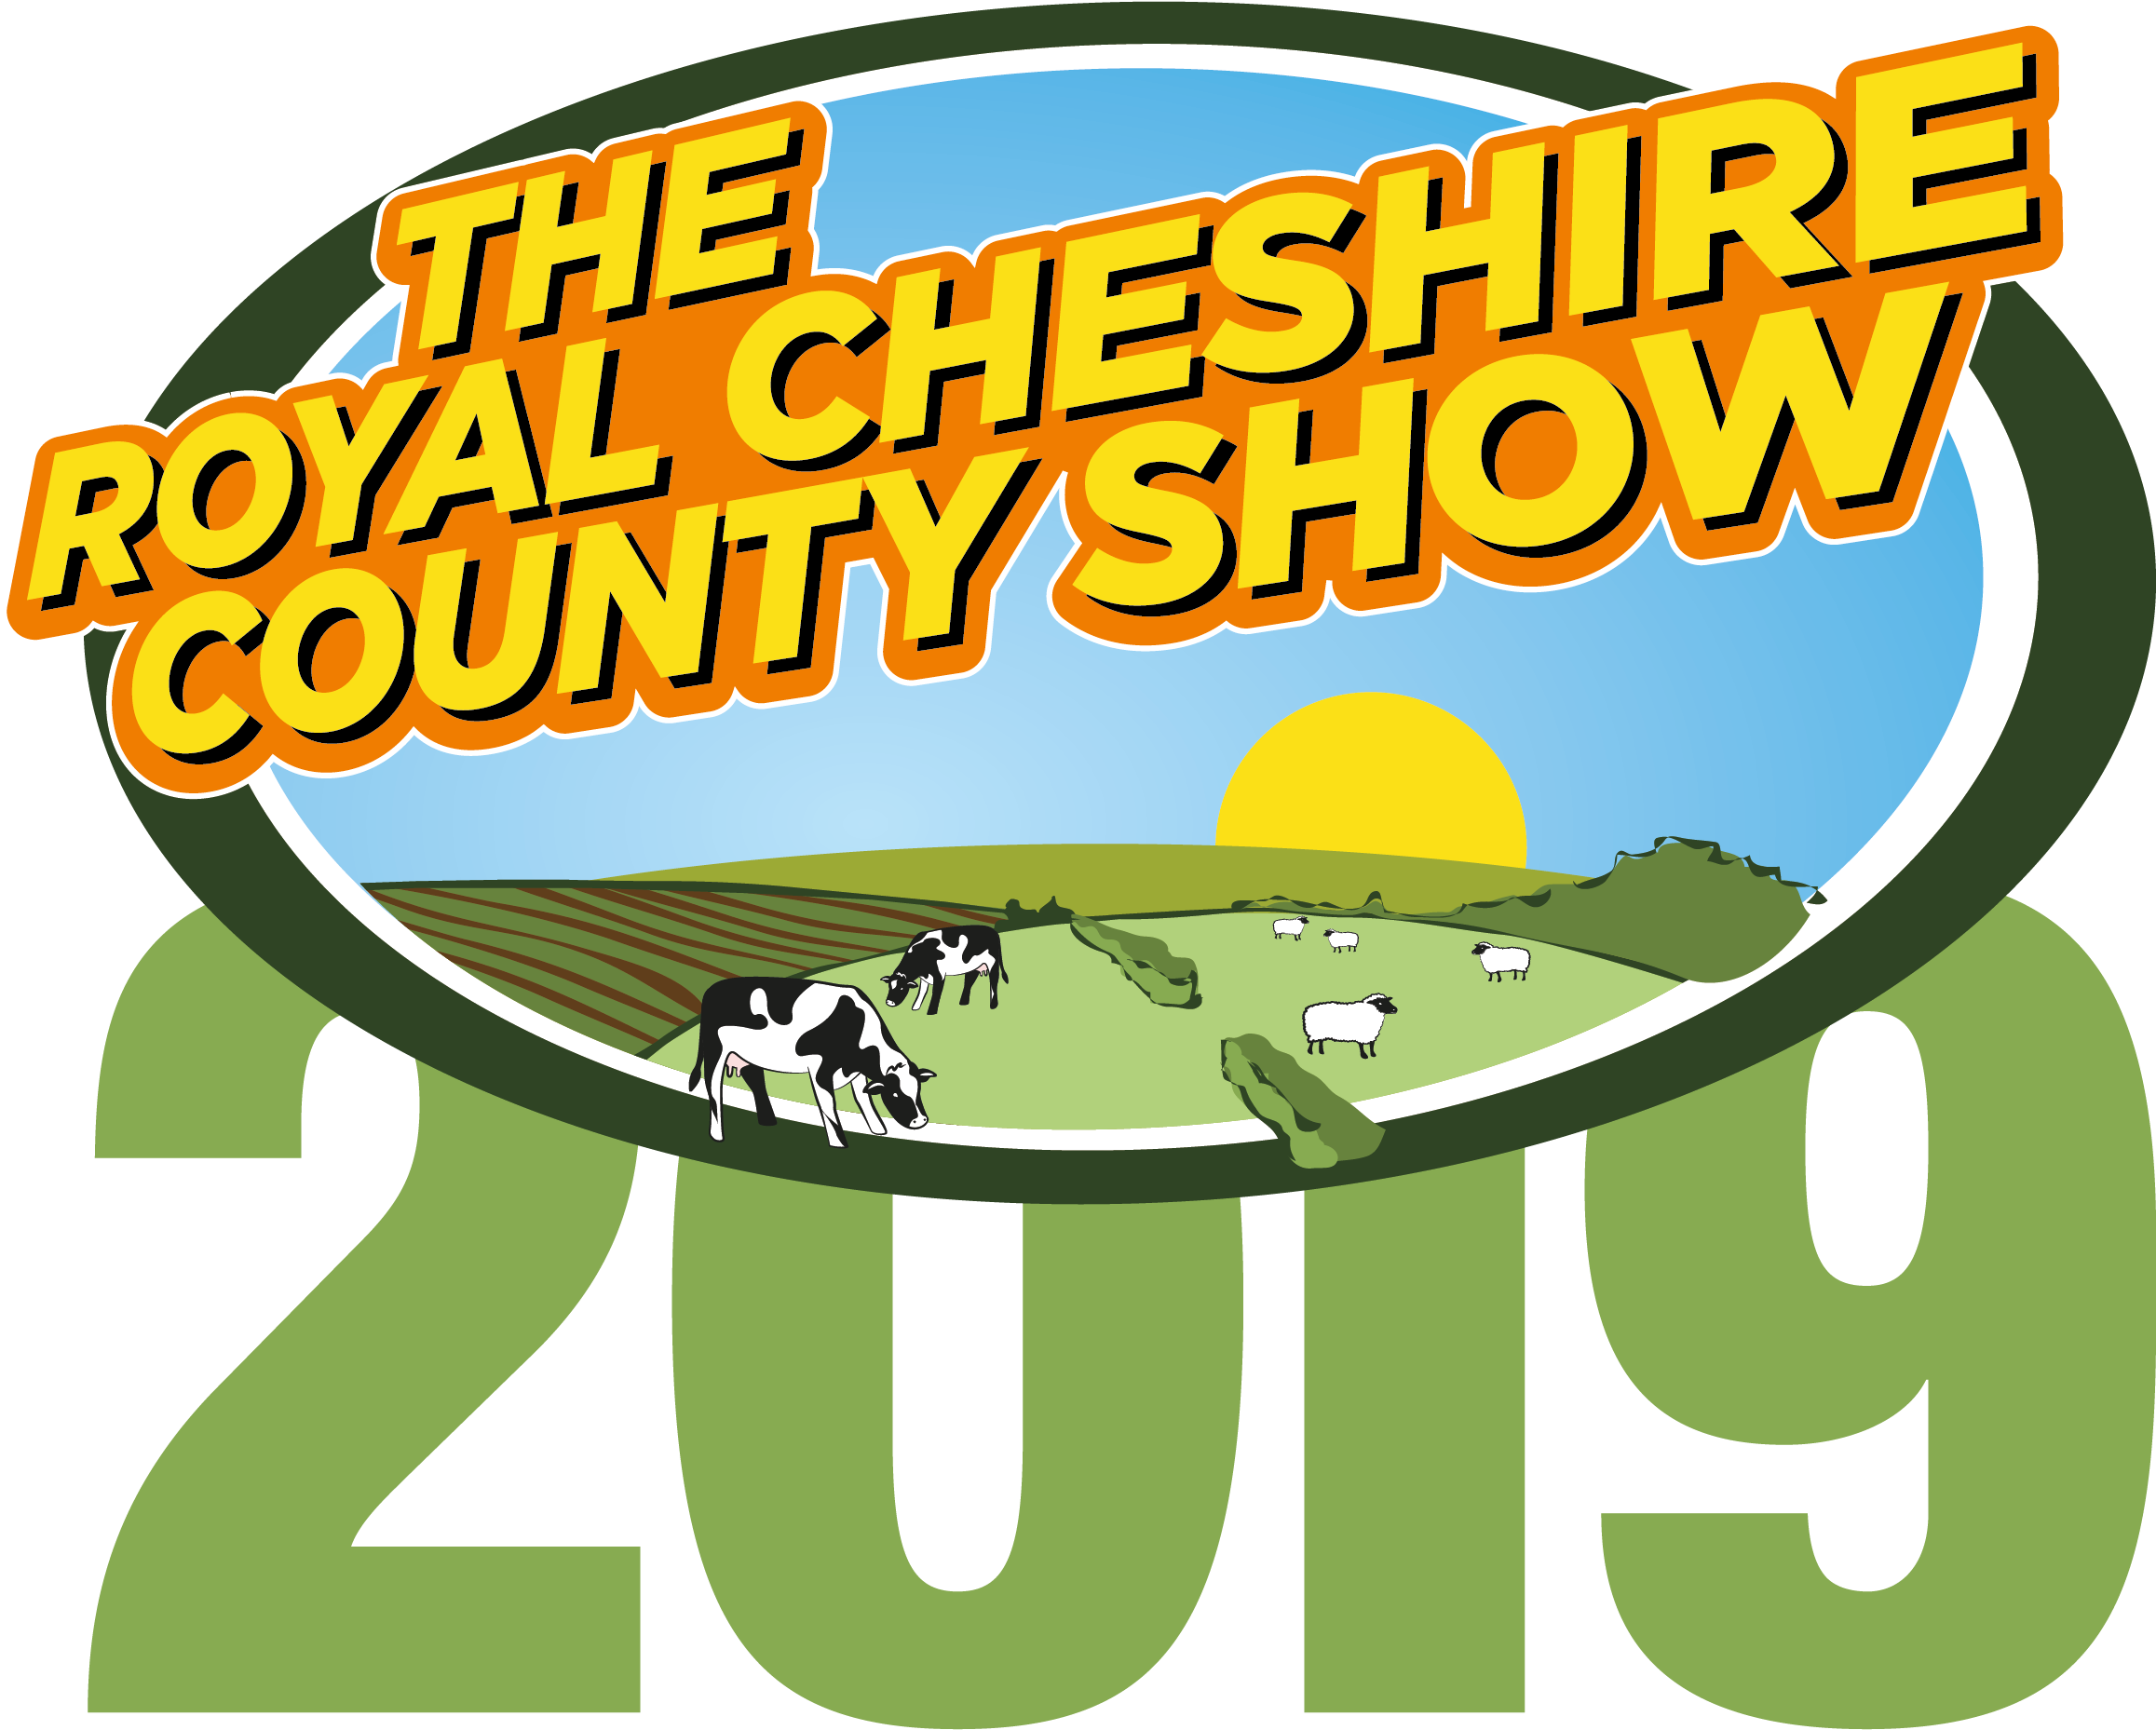 Rccs Logo 2019 Final - Cheshire County Show (2363x1900)